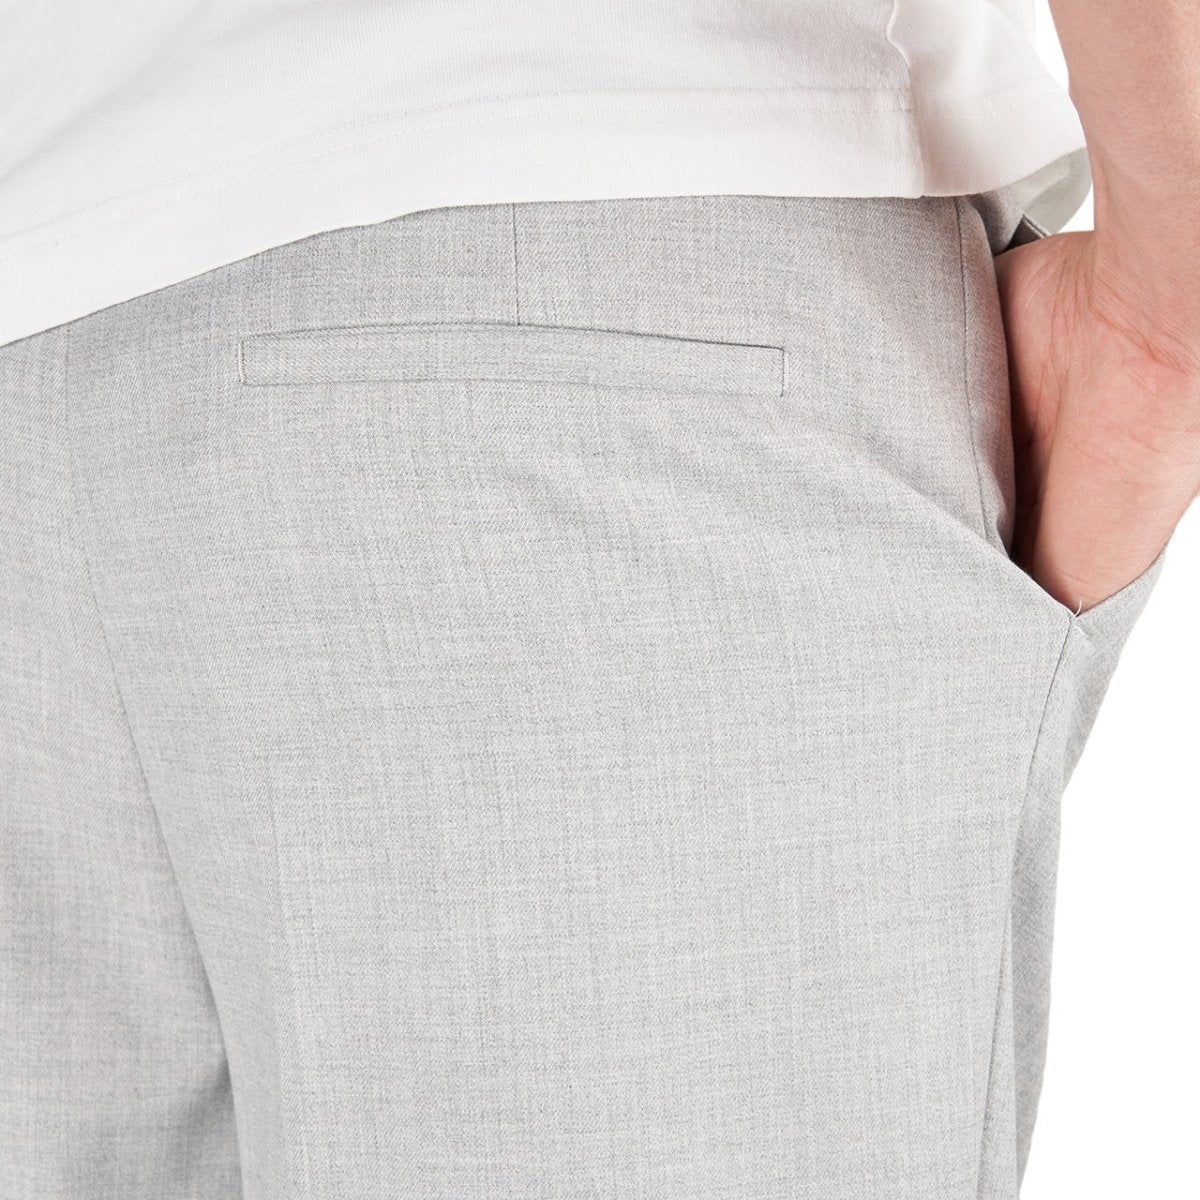 Han Kjobenhavn Boxy Suit Pants (Grau)  - Allike Store